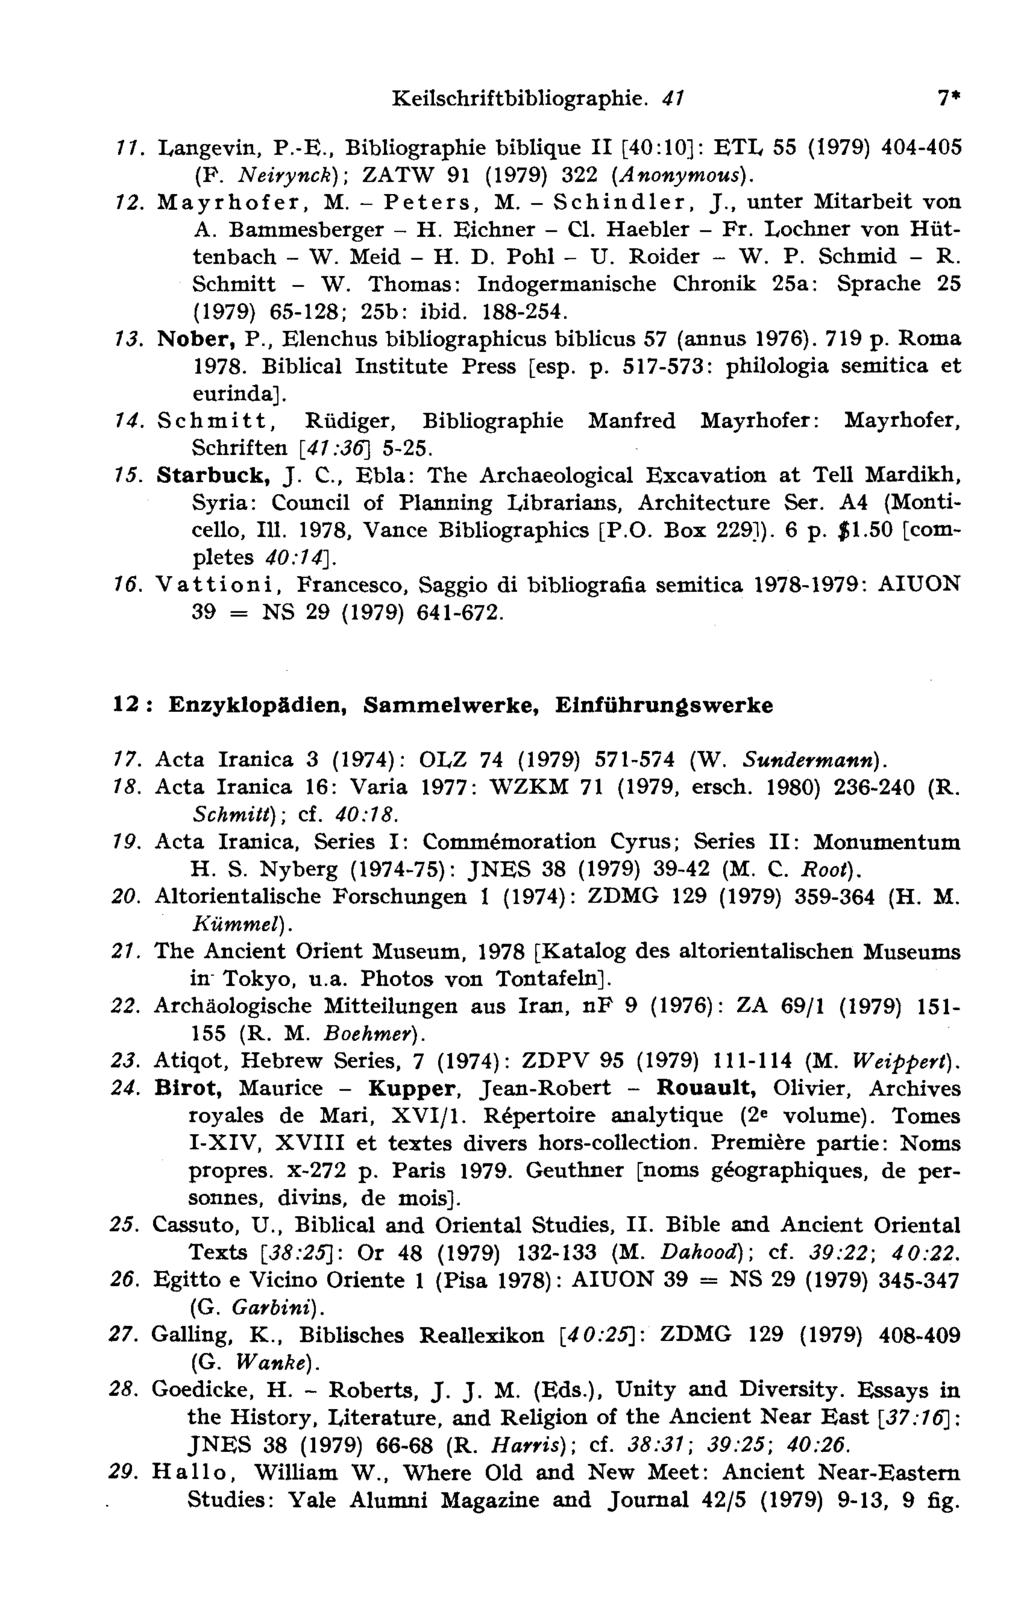 Keilschriftbibliographie. 4 1 7* 11. Lange vin, P. E., Bibliographie biblique II [40:10] : ETI, 55 (1979) 404-405 (F. Neirynck) ; ZATW 91 (1979) 322 (Anonymous). 12. Mayrhofer, M. - Peters, M.